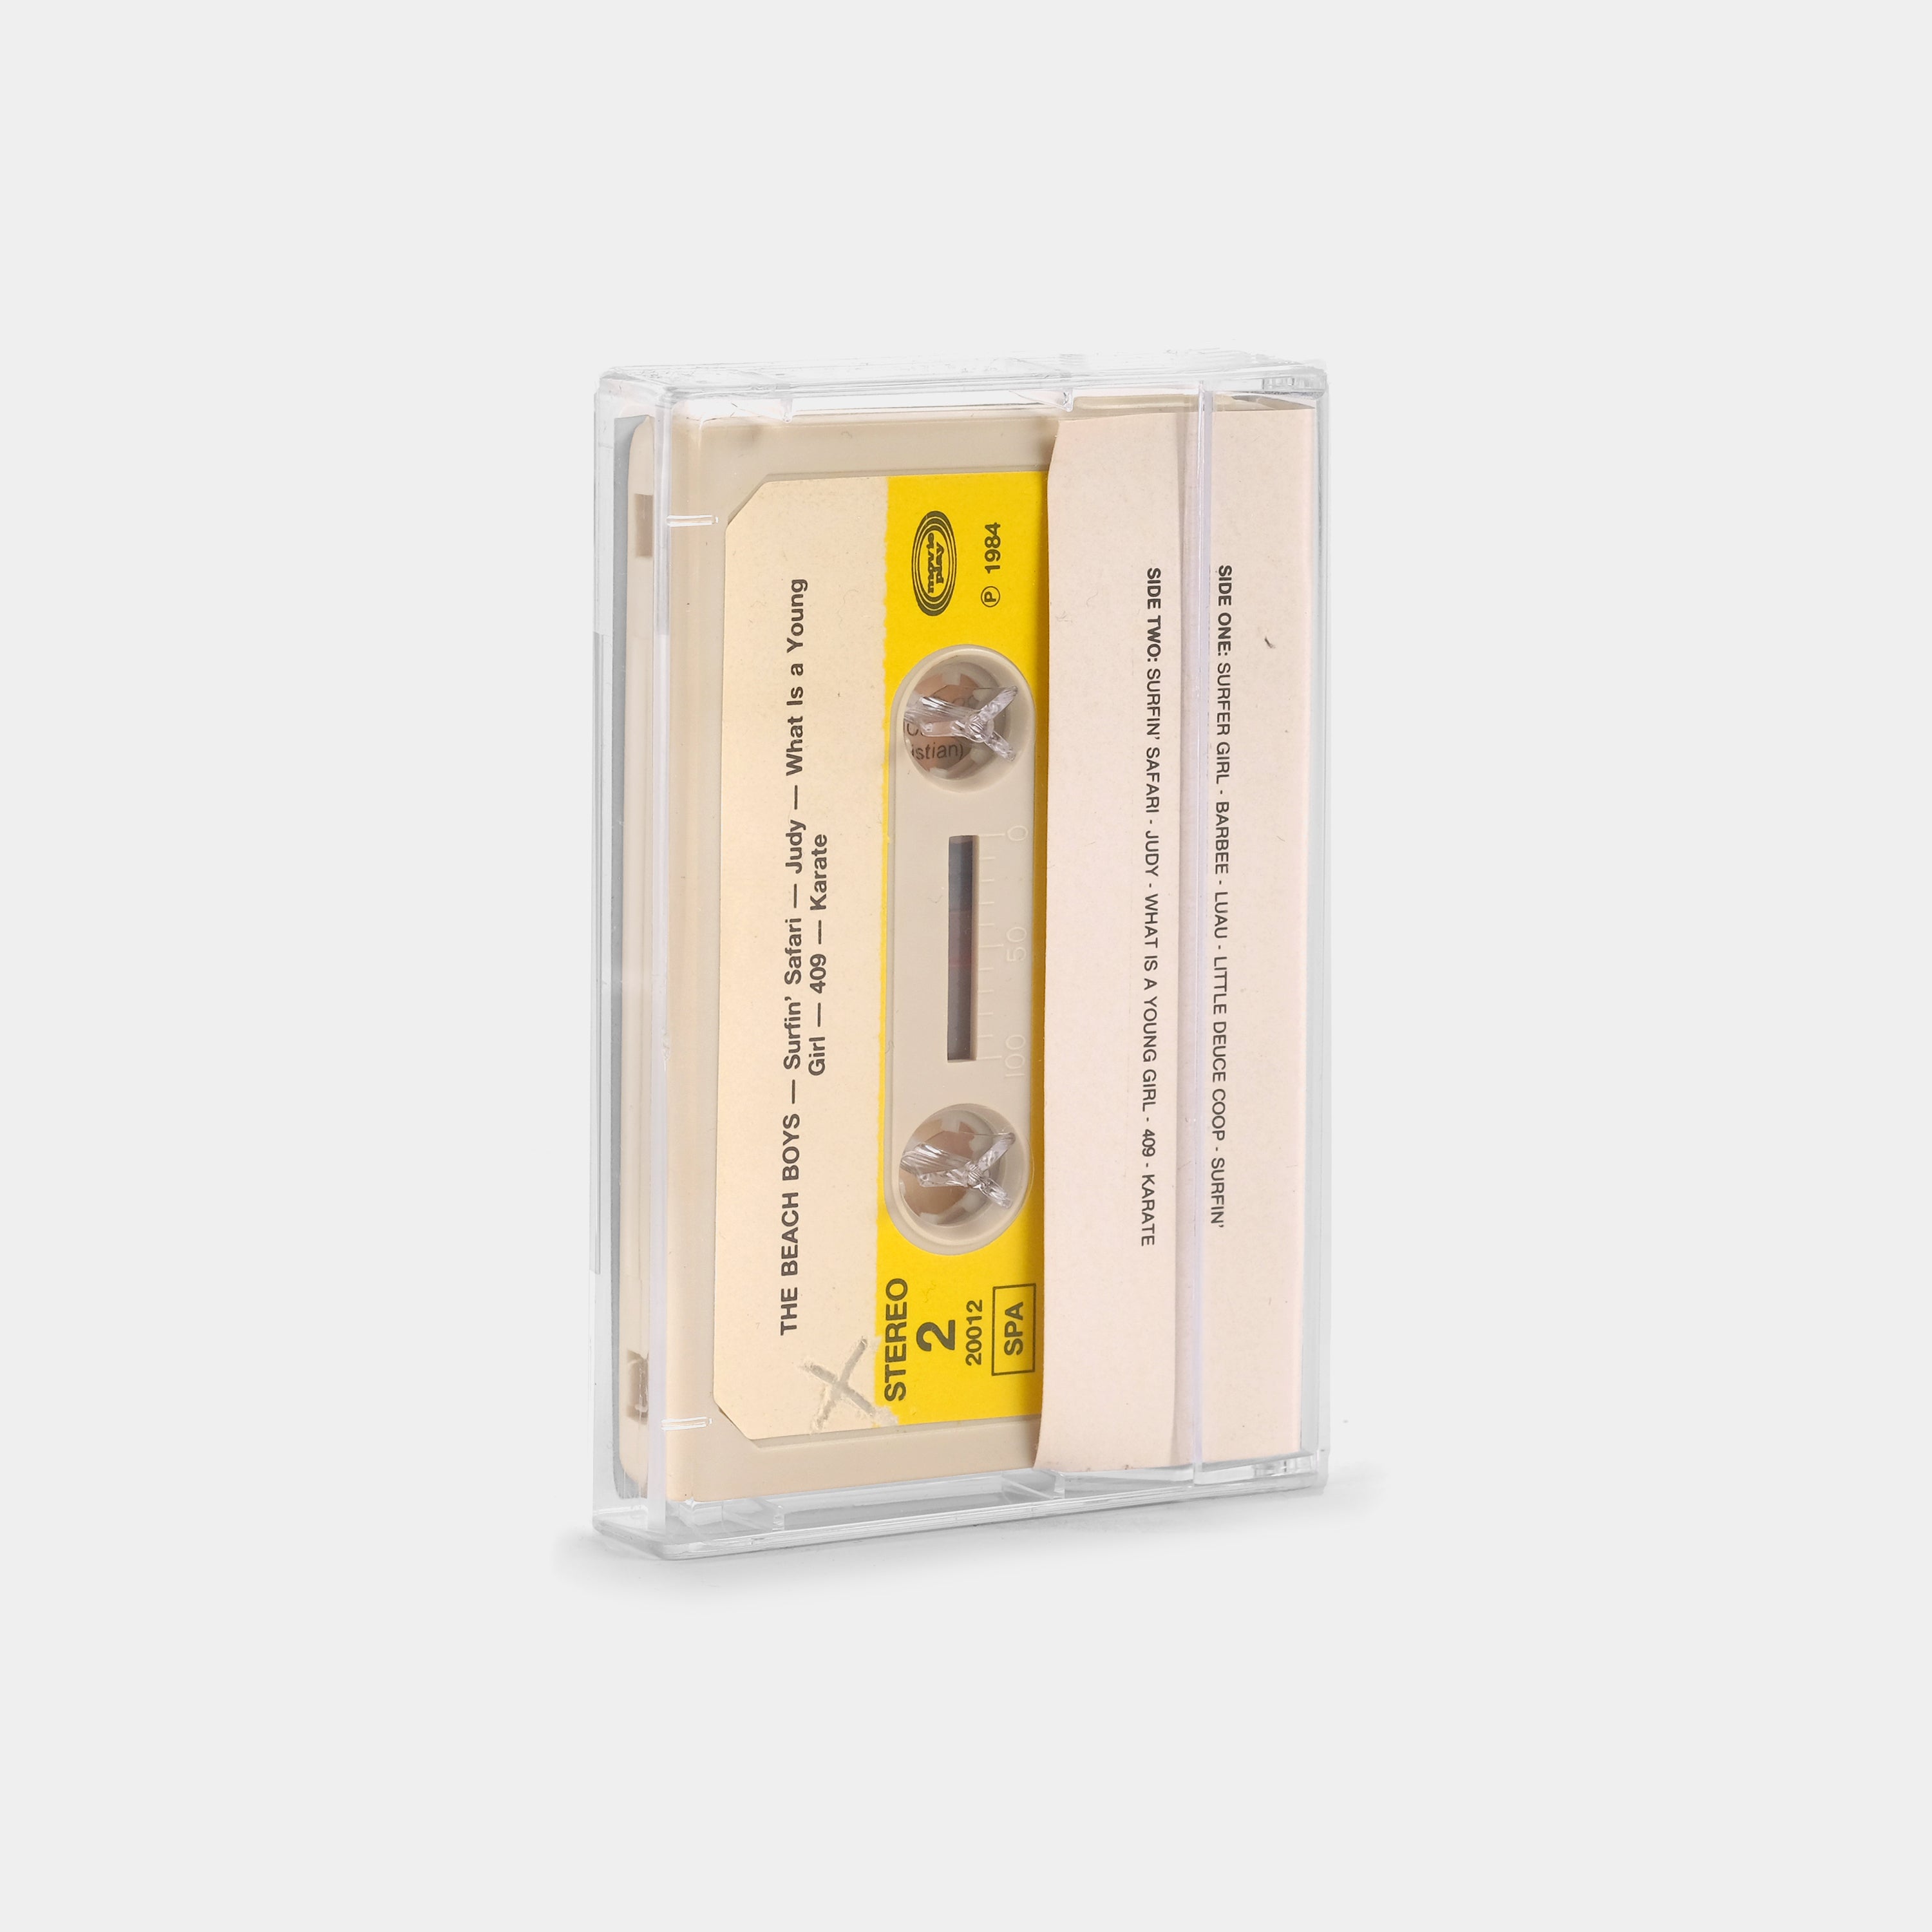 The Beach Boys - Surfin' Cassette Tape